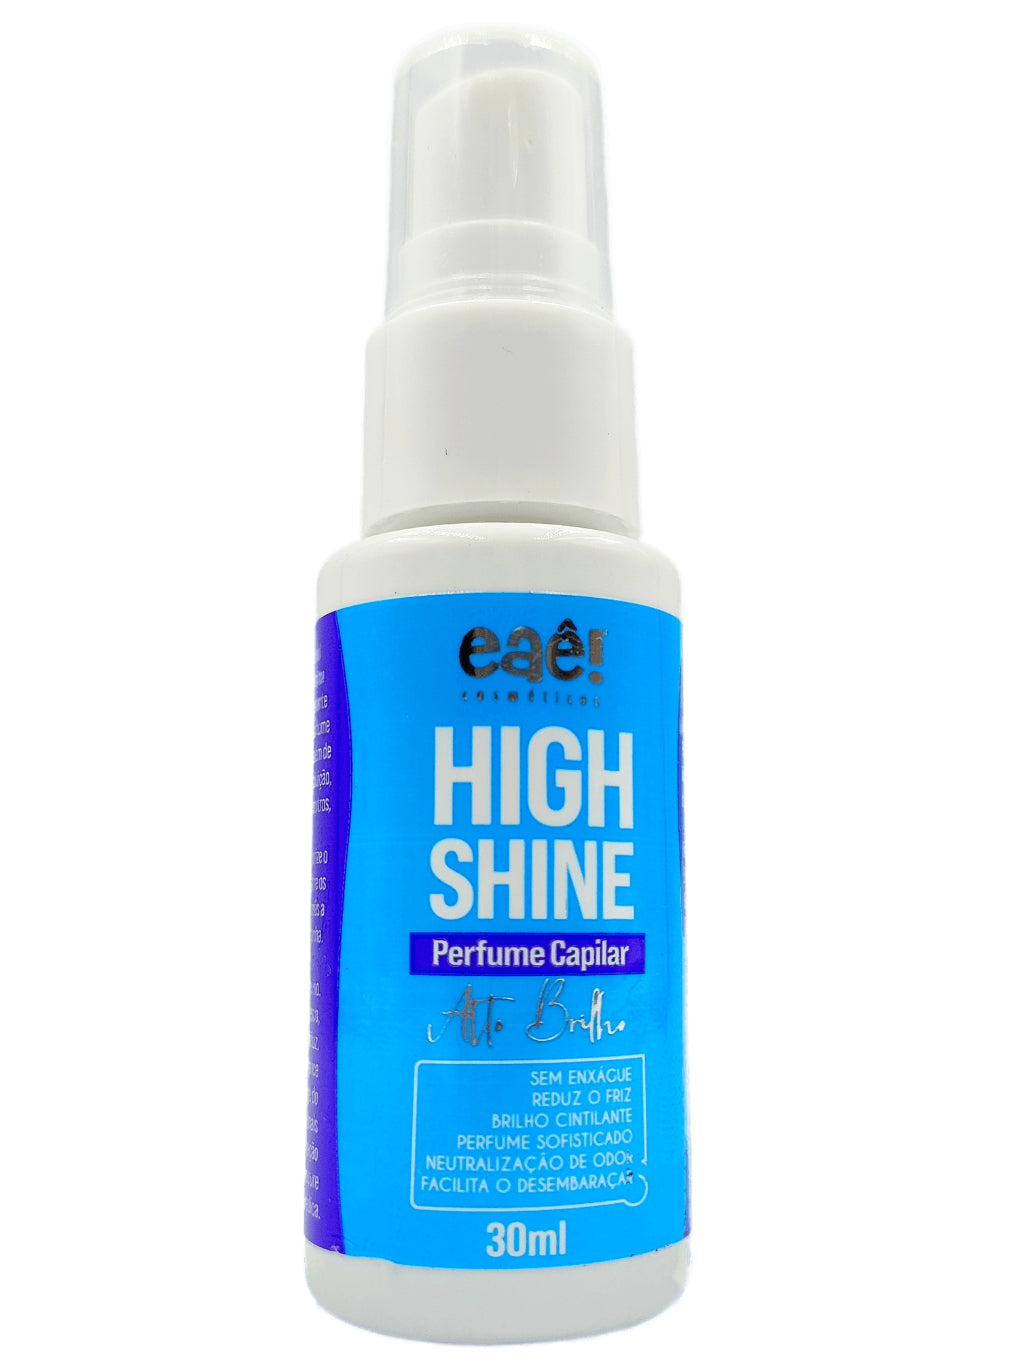 Eae Cosmeticos, High Shine Perfume Capilar, Finishing Oil For Hair, 30ml,